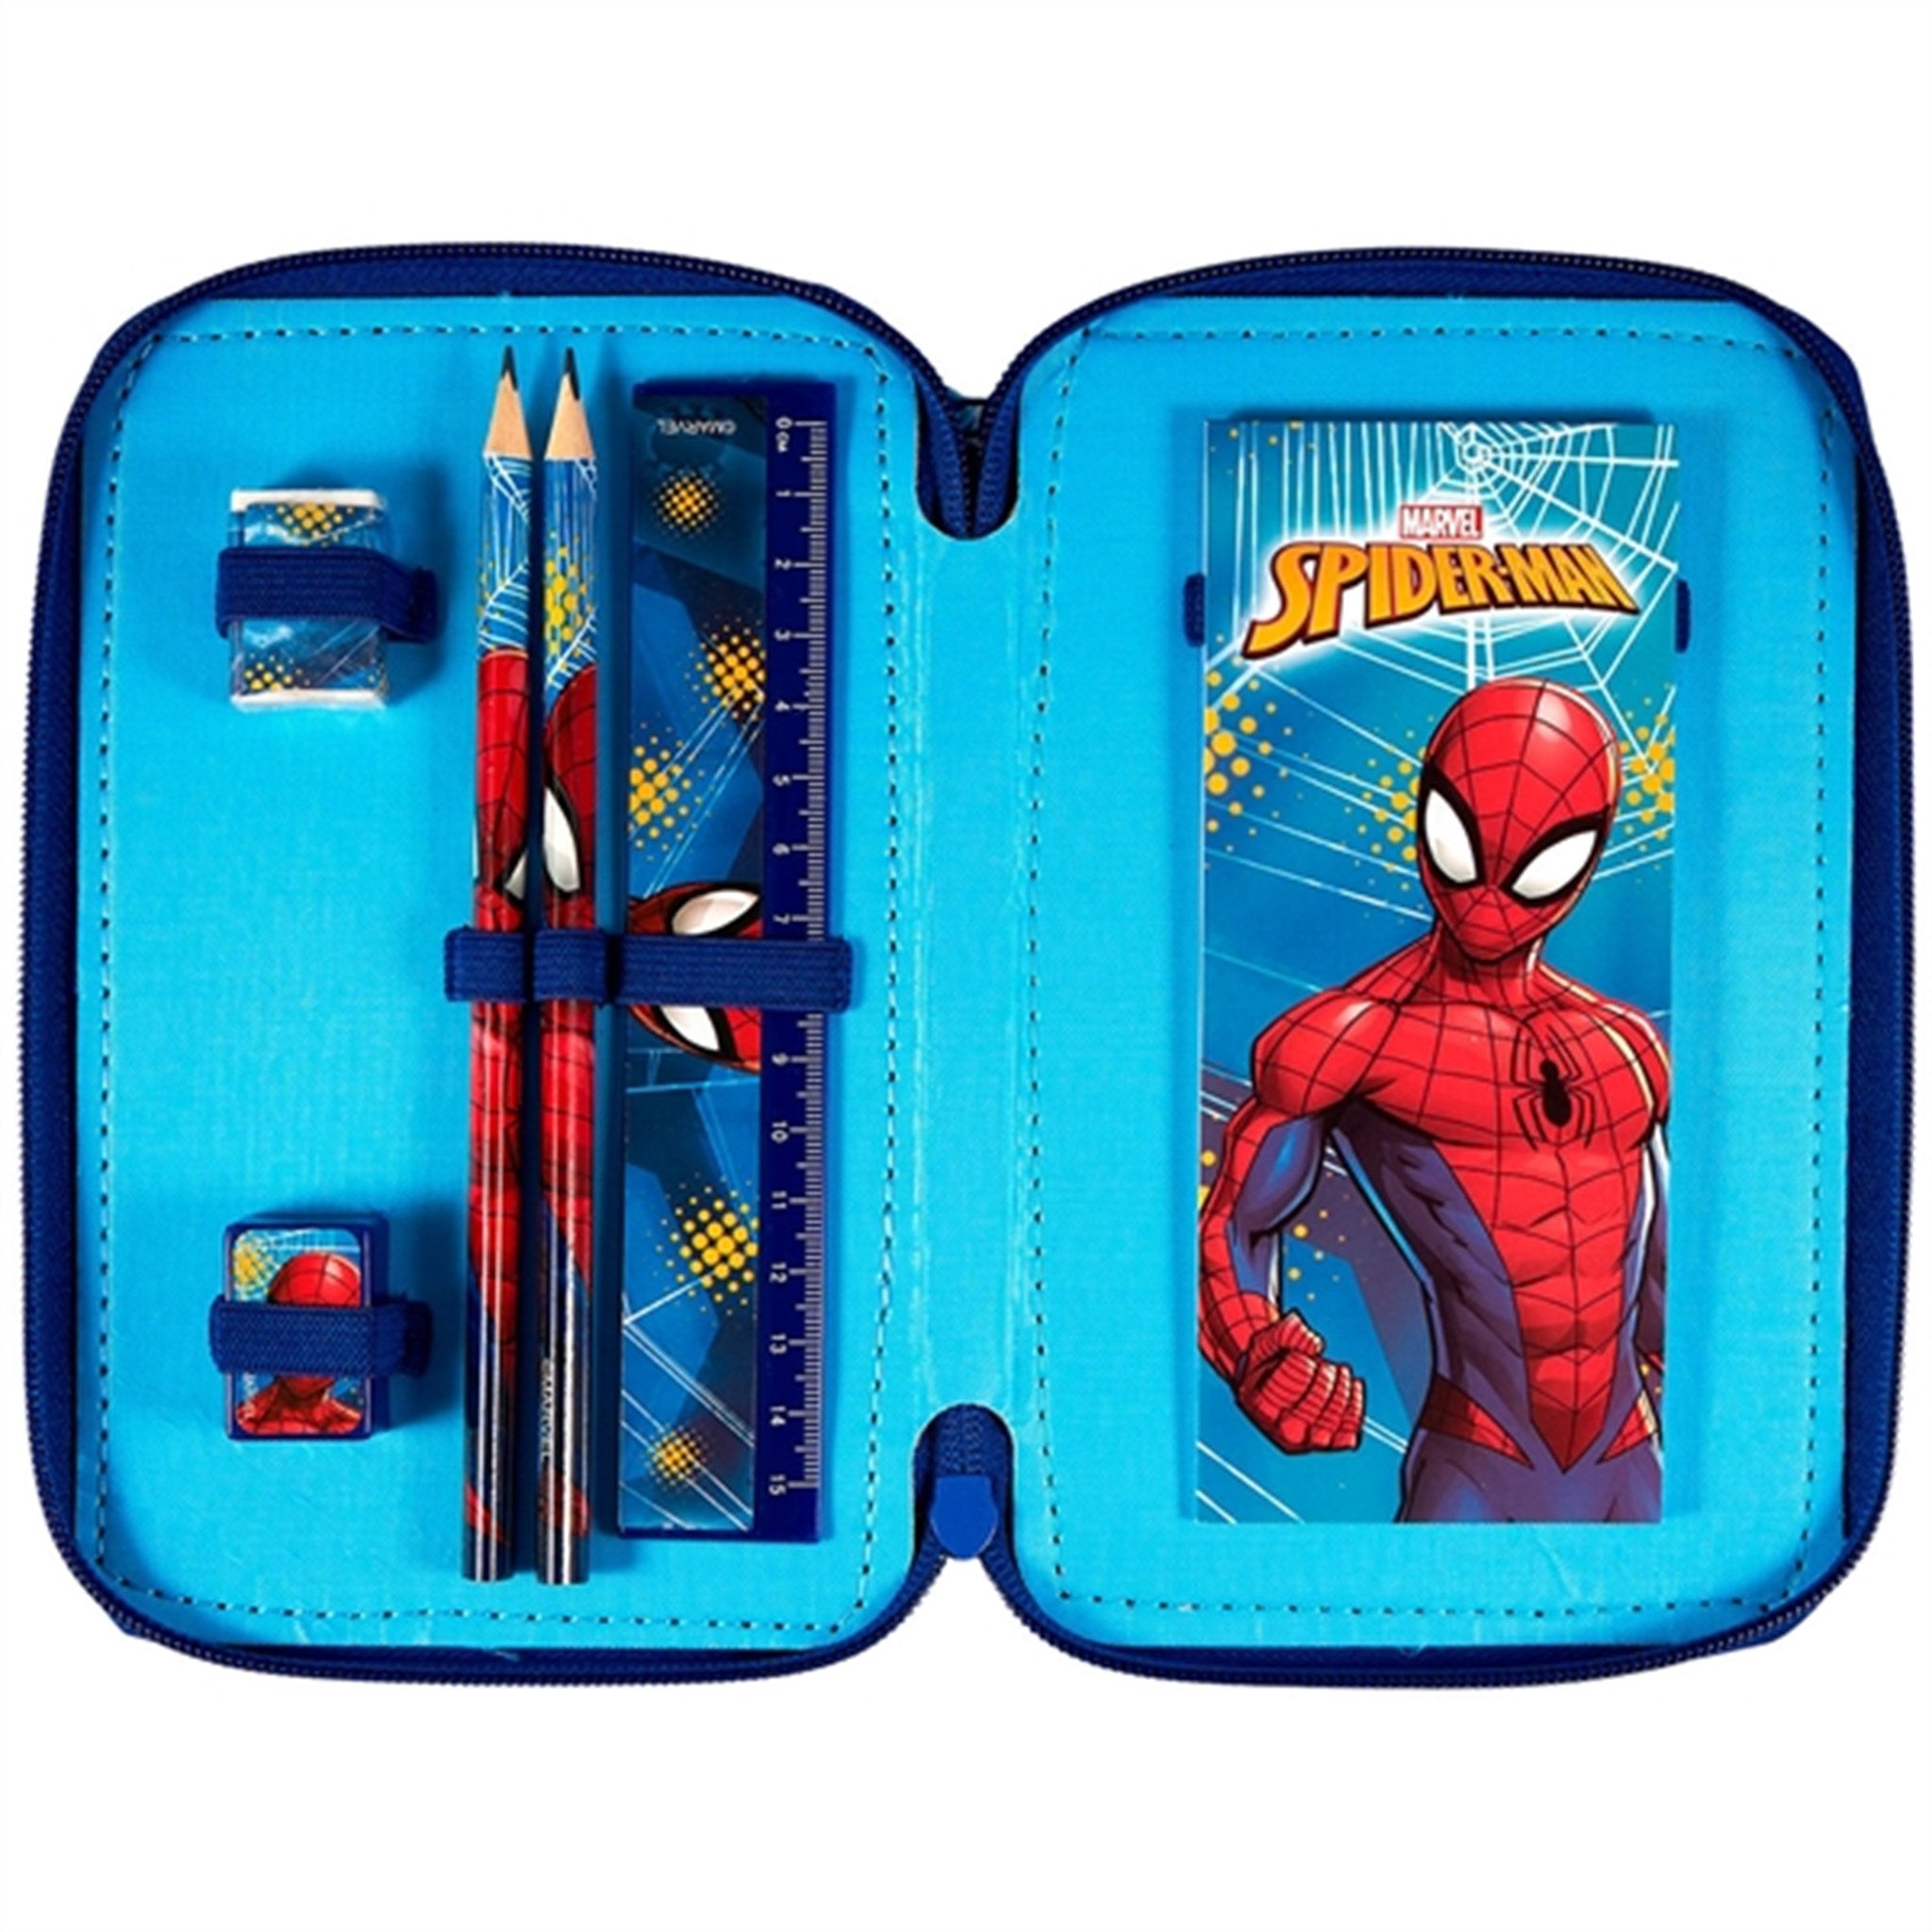 Euromic Spiderman Pencil Case 2